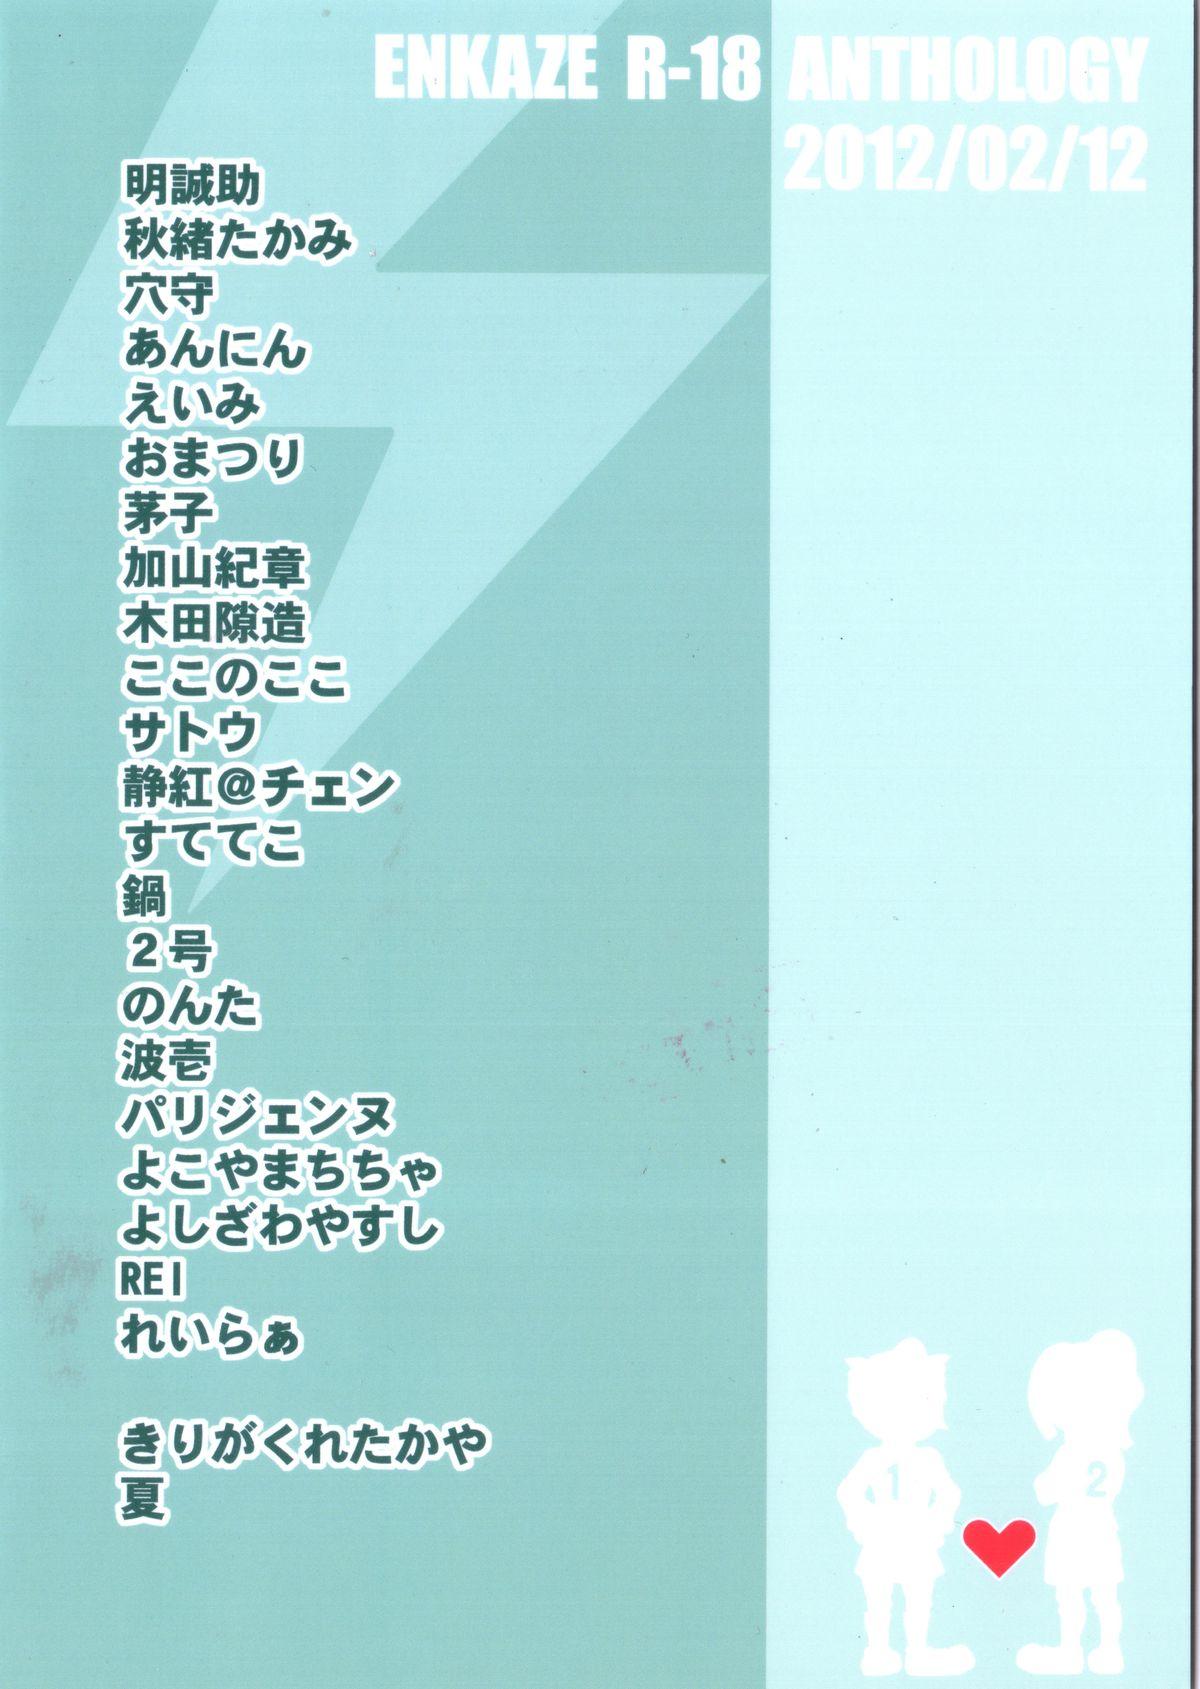 Hot Cunt Kirigakure Takaya (Aniki Otokodou) - ×××× Yarouze! (Inazuma Eleven) - Inazuma eleven Pack - Page 2